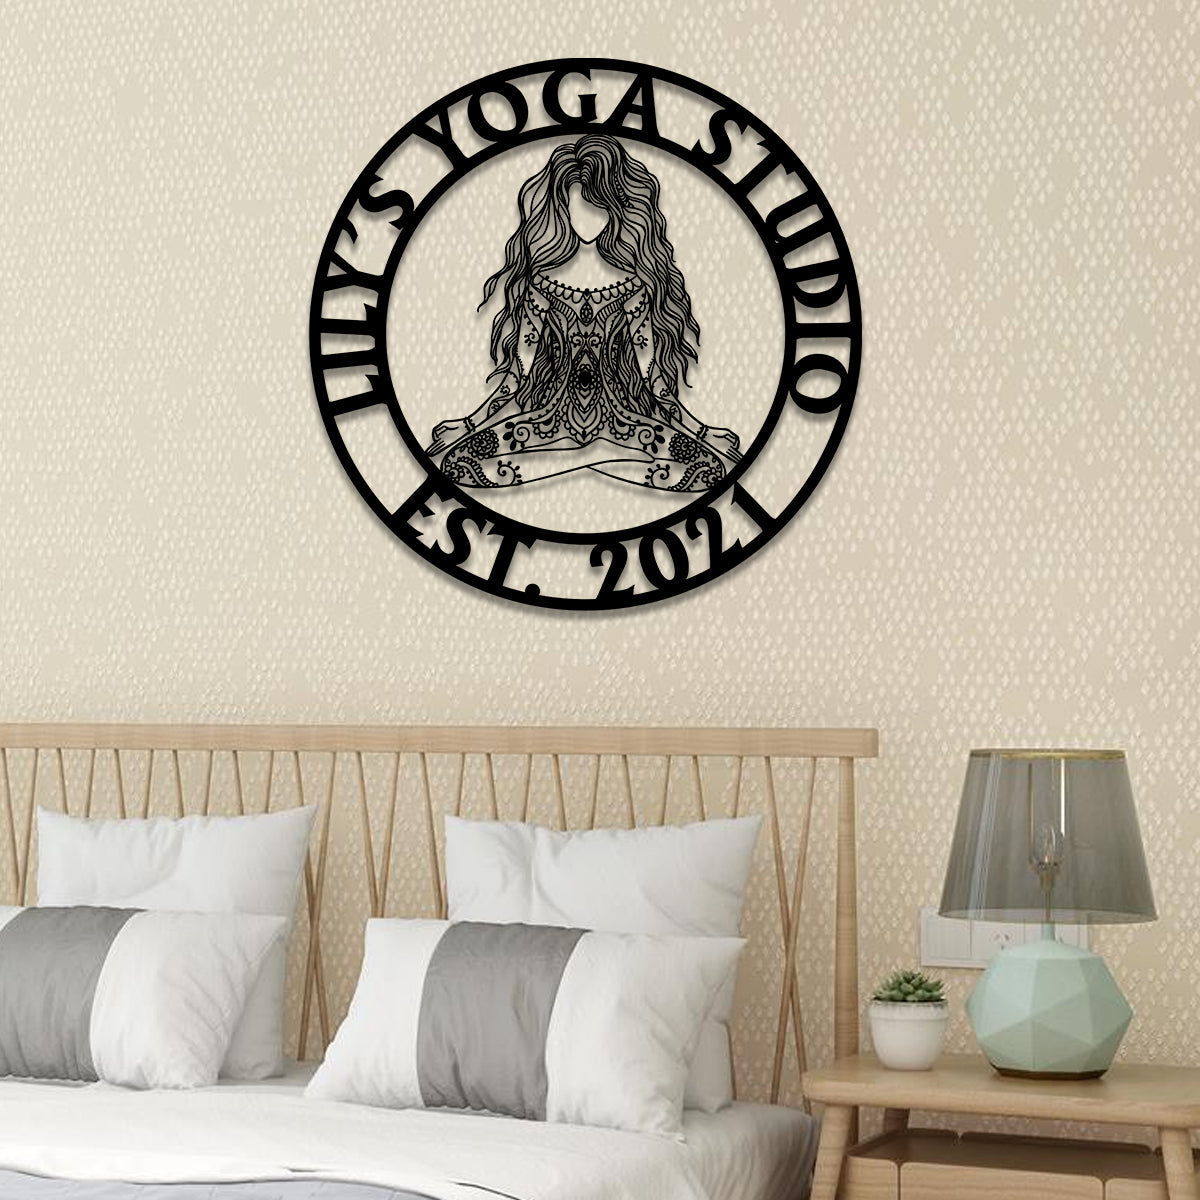 Personalized Yoga Girl Mandala Metal Sign, Yoga Studio, Meditation Room, Home Wall Decor